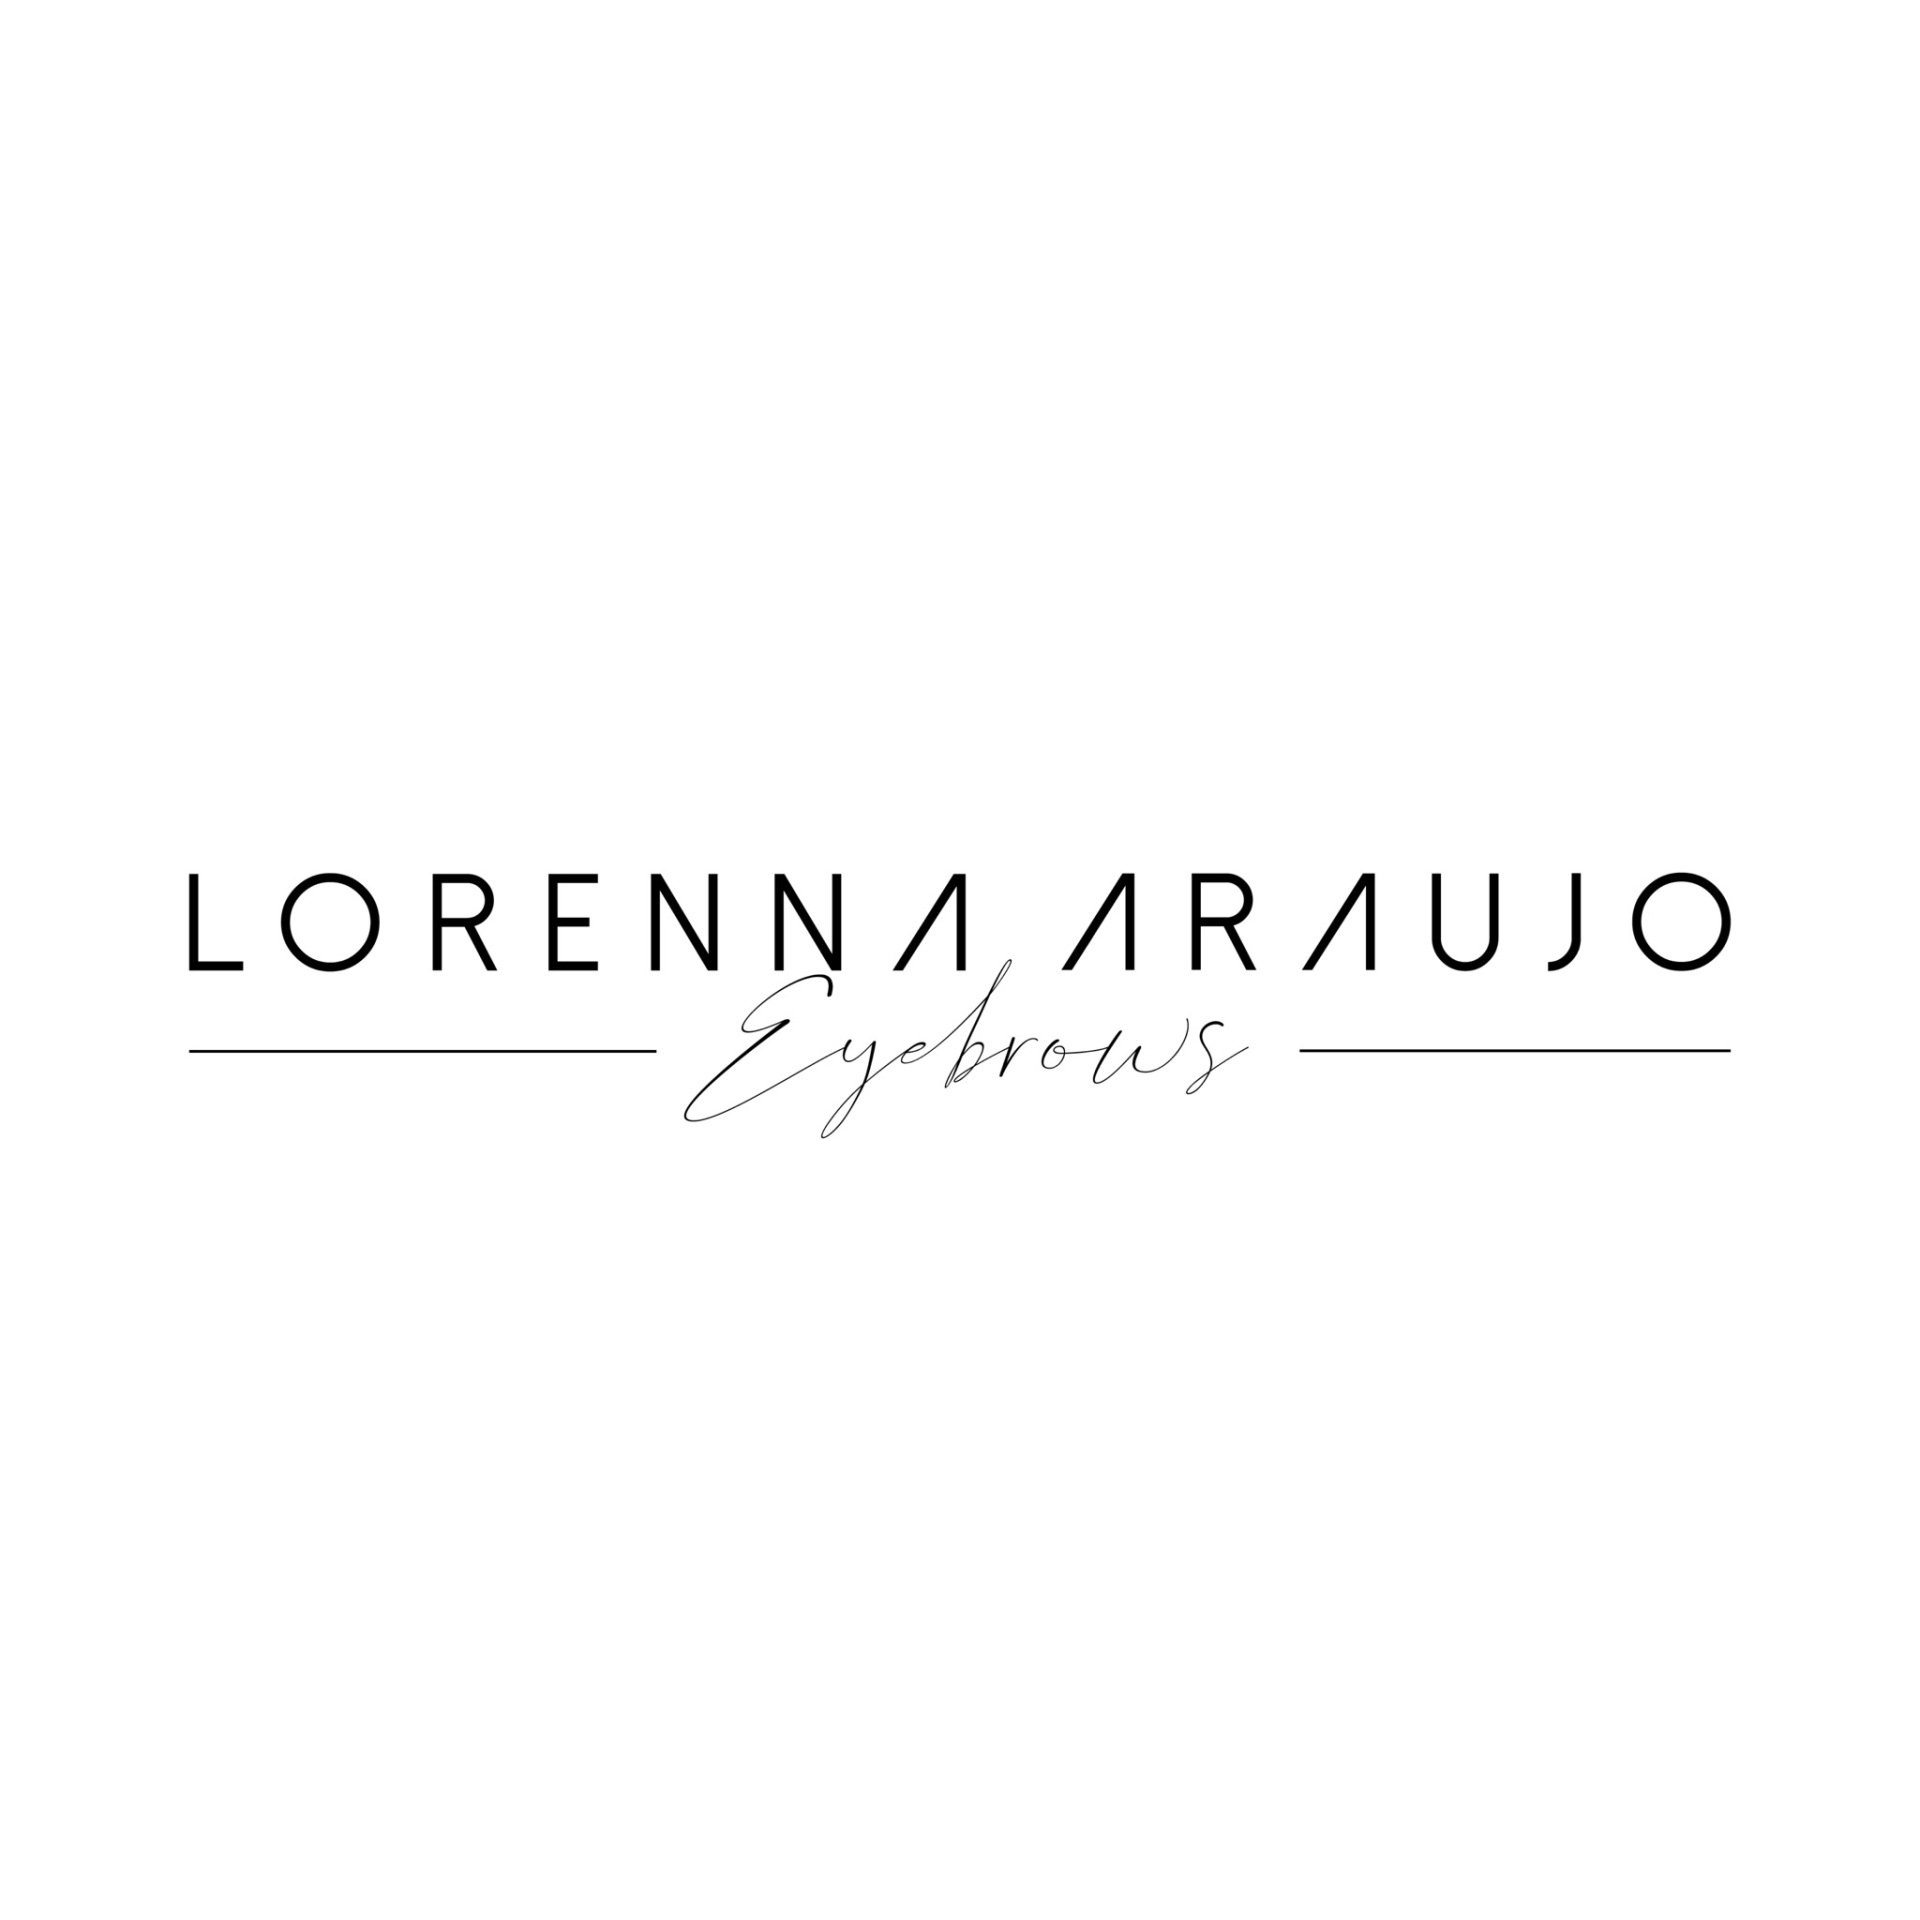 (c) Lorennaaraujo.com